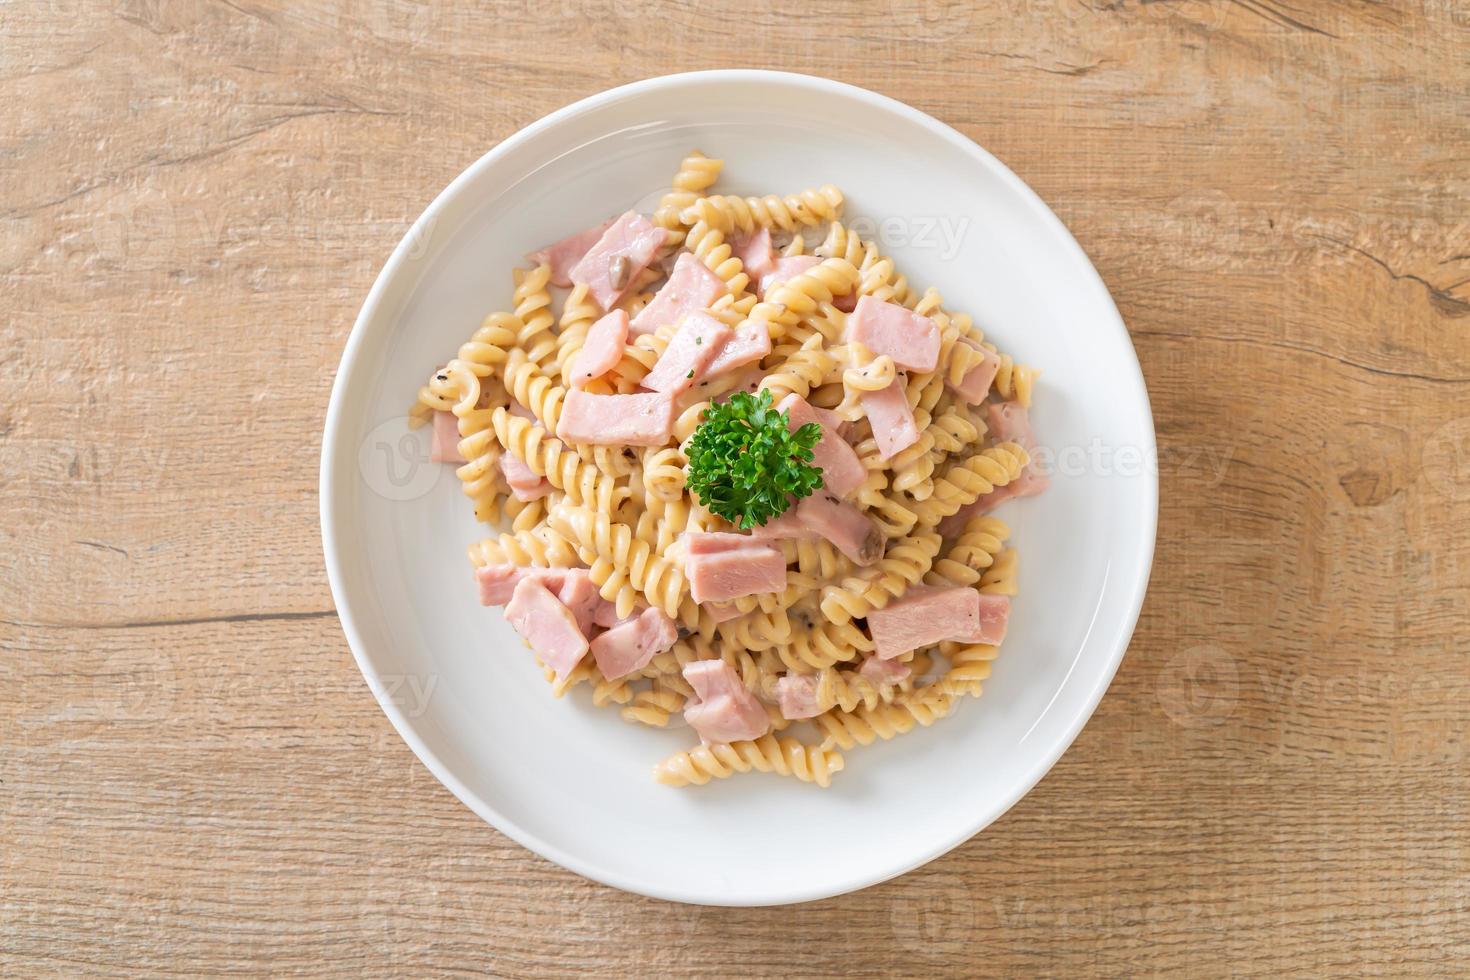 Spirali or spiral pasta mushroom cream sauce with ham - Italian food style photo